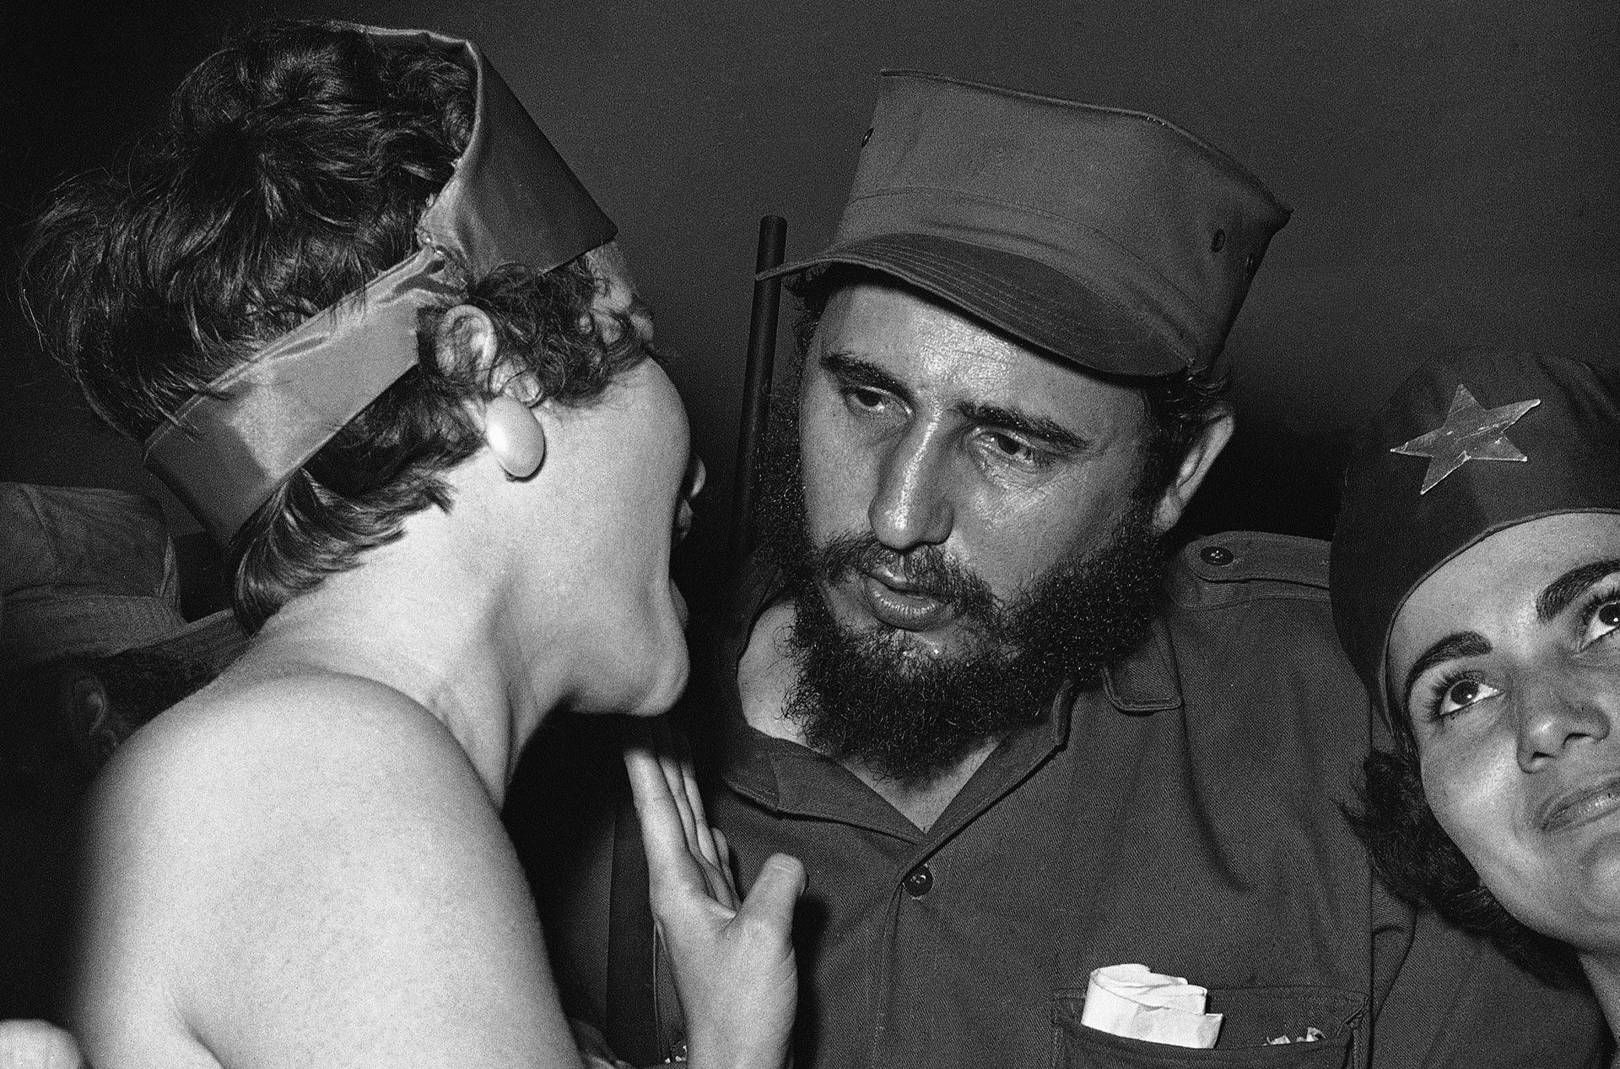 Fidel Castro has slept with over 35,000 women.